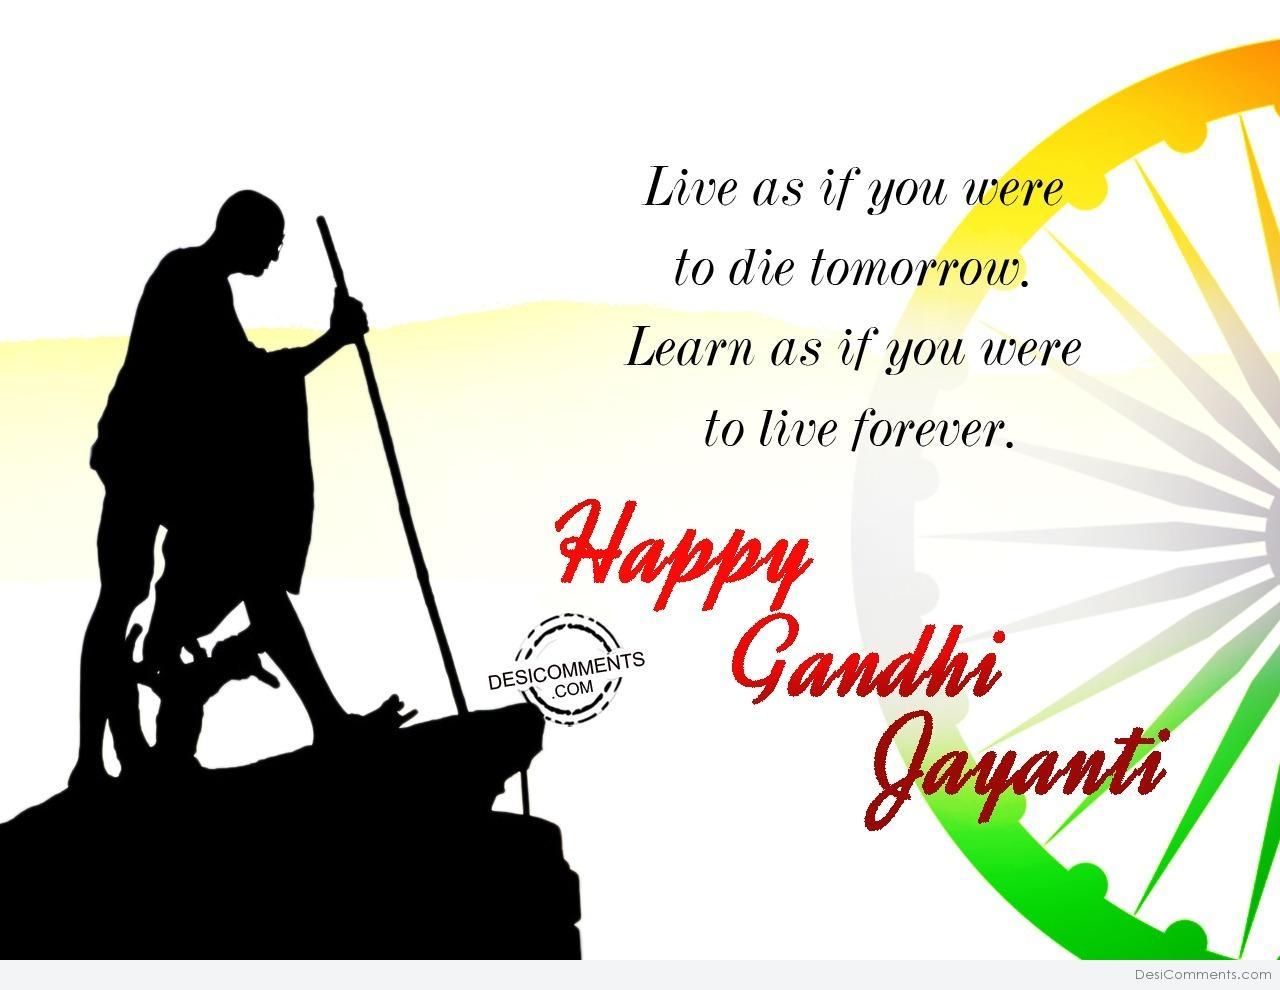 Gandhi Jayanti Picture, Image, Graphics